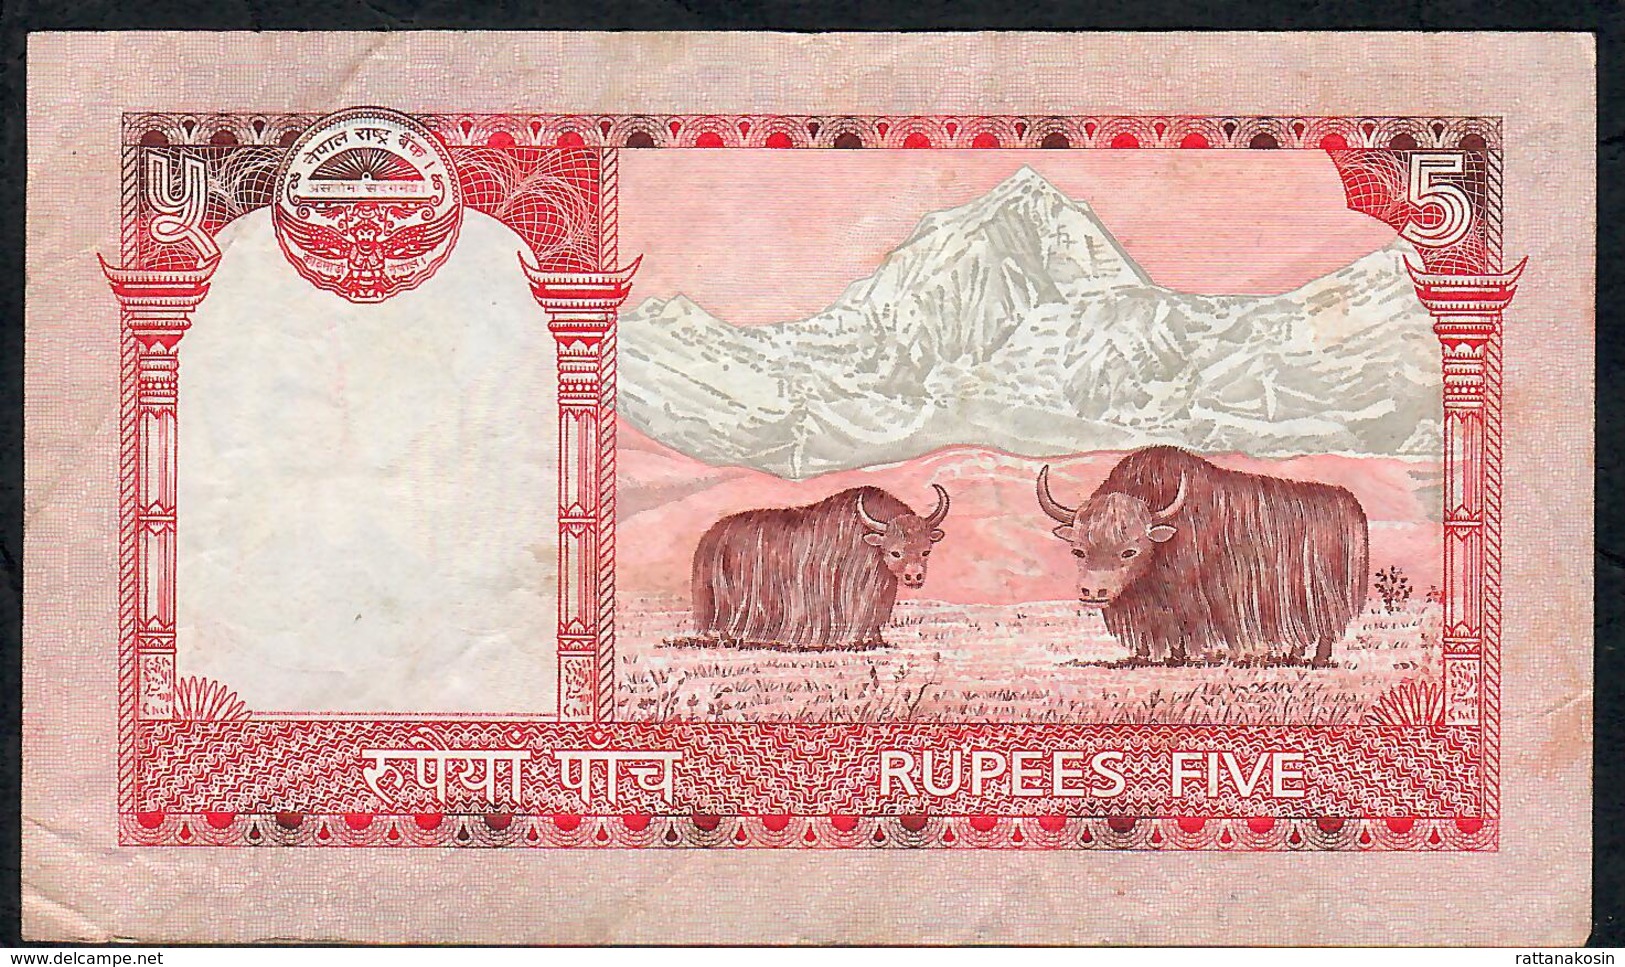 NEPAL P60b 5 RUPEES 2010 Signature 16    VF    NO P.h. - Népal